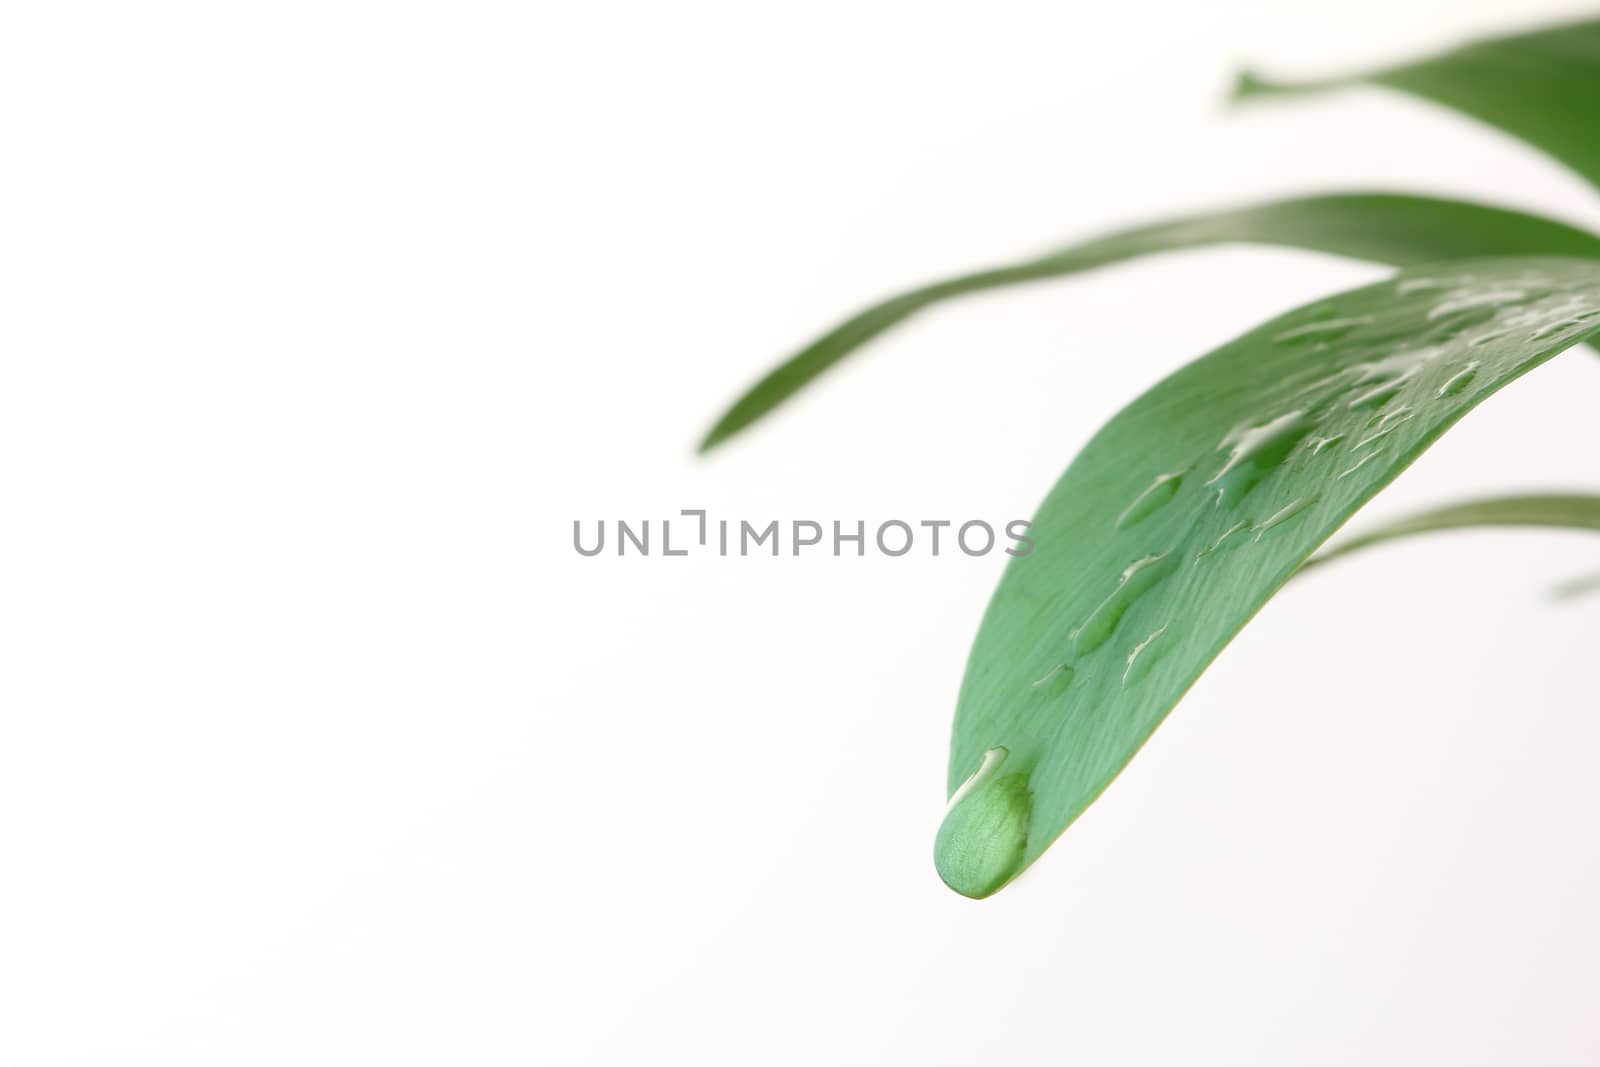 Waterdrop on green leaf white background